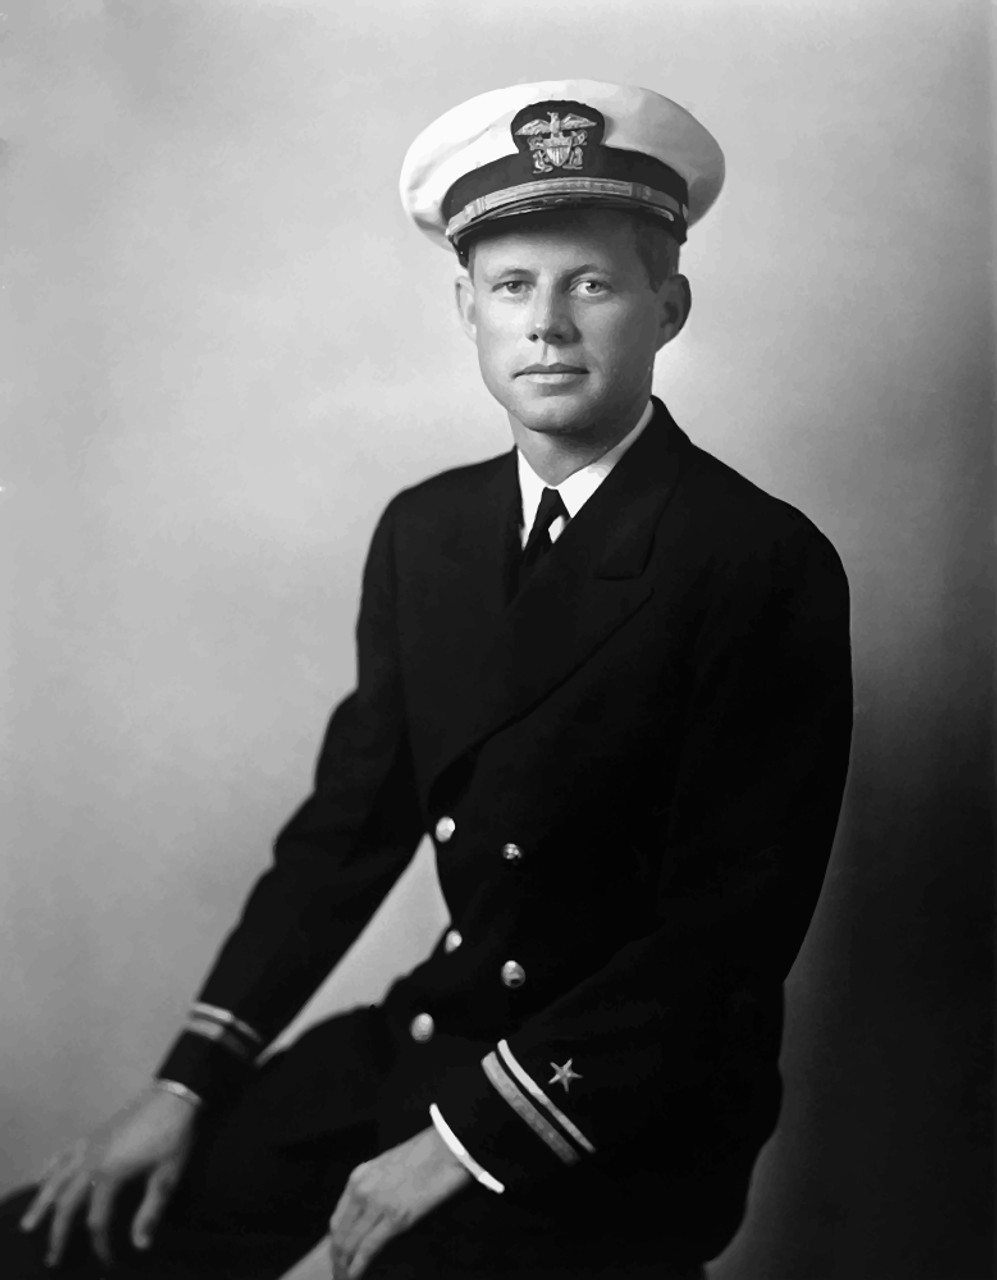 John F. Kennedy "Navy, 1942" Photo Print